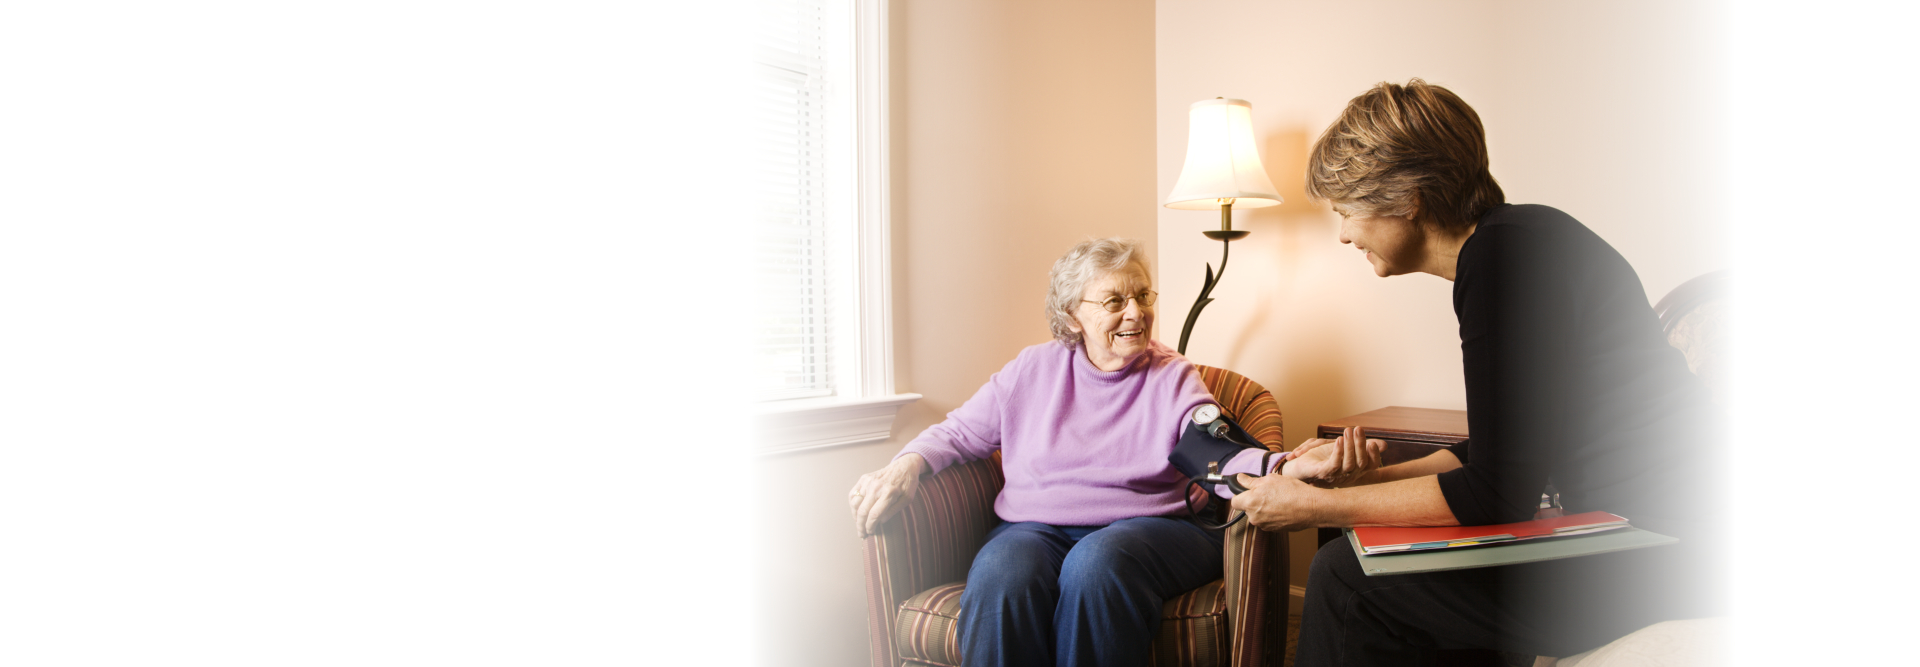 caregiver monitoring elderly woman's blood pressure